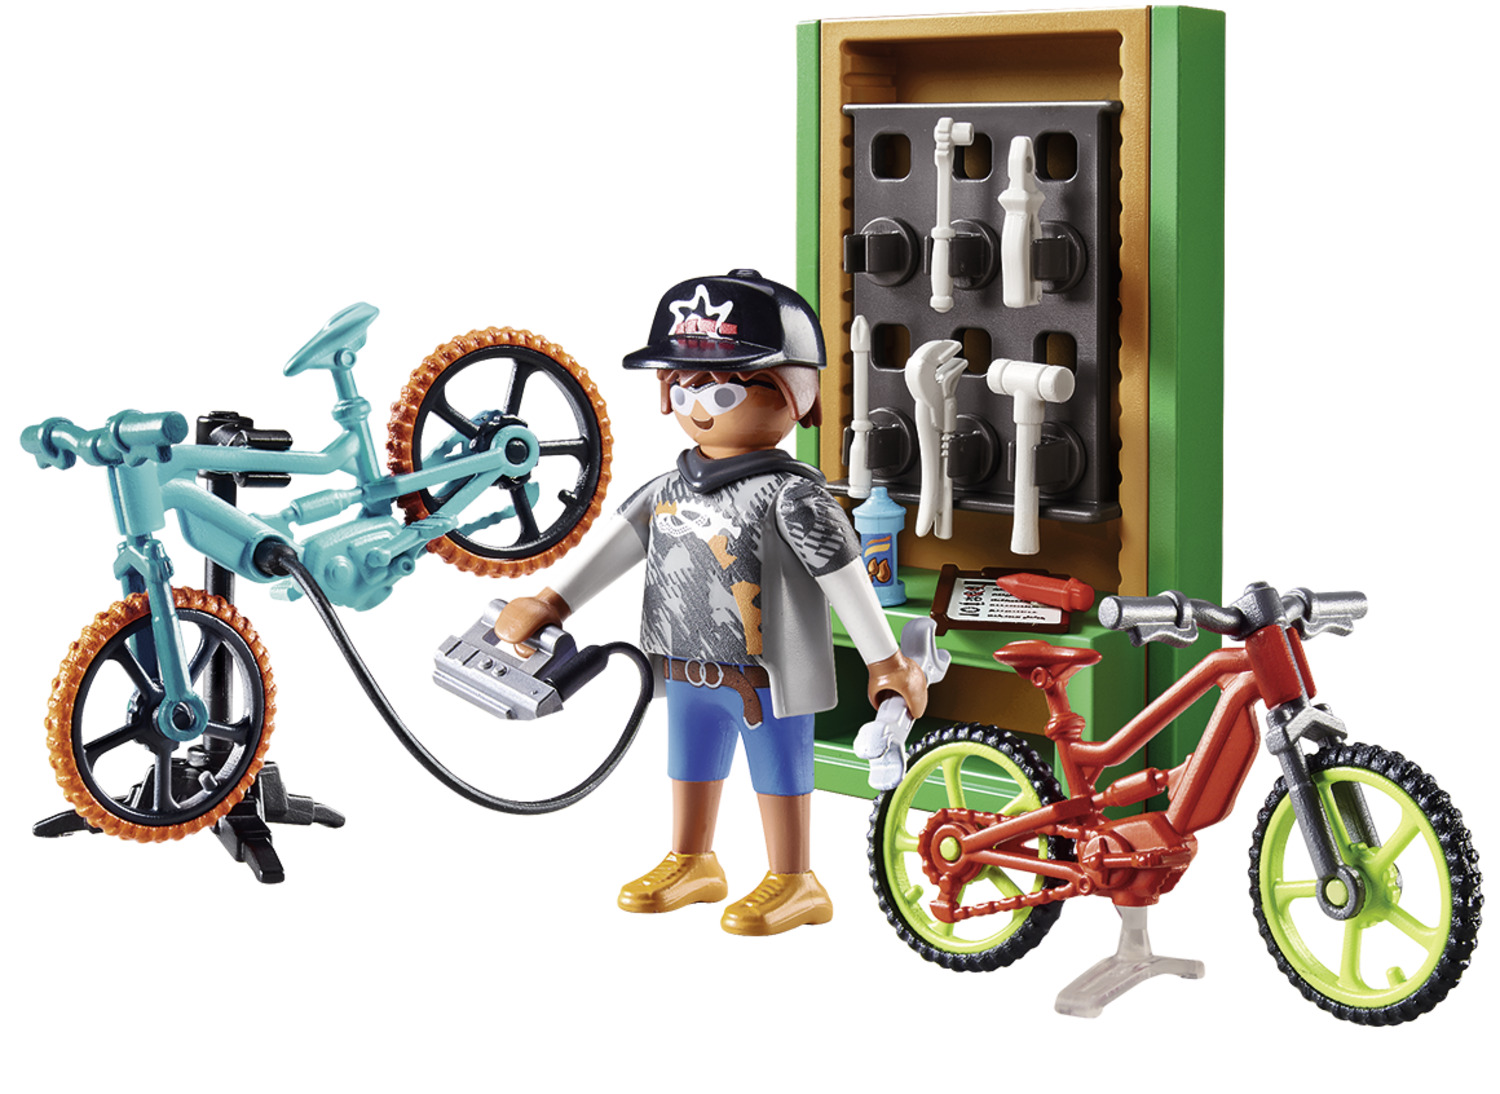 Playmobil - Συνεργείο Ποδηλάτων - Gift Set